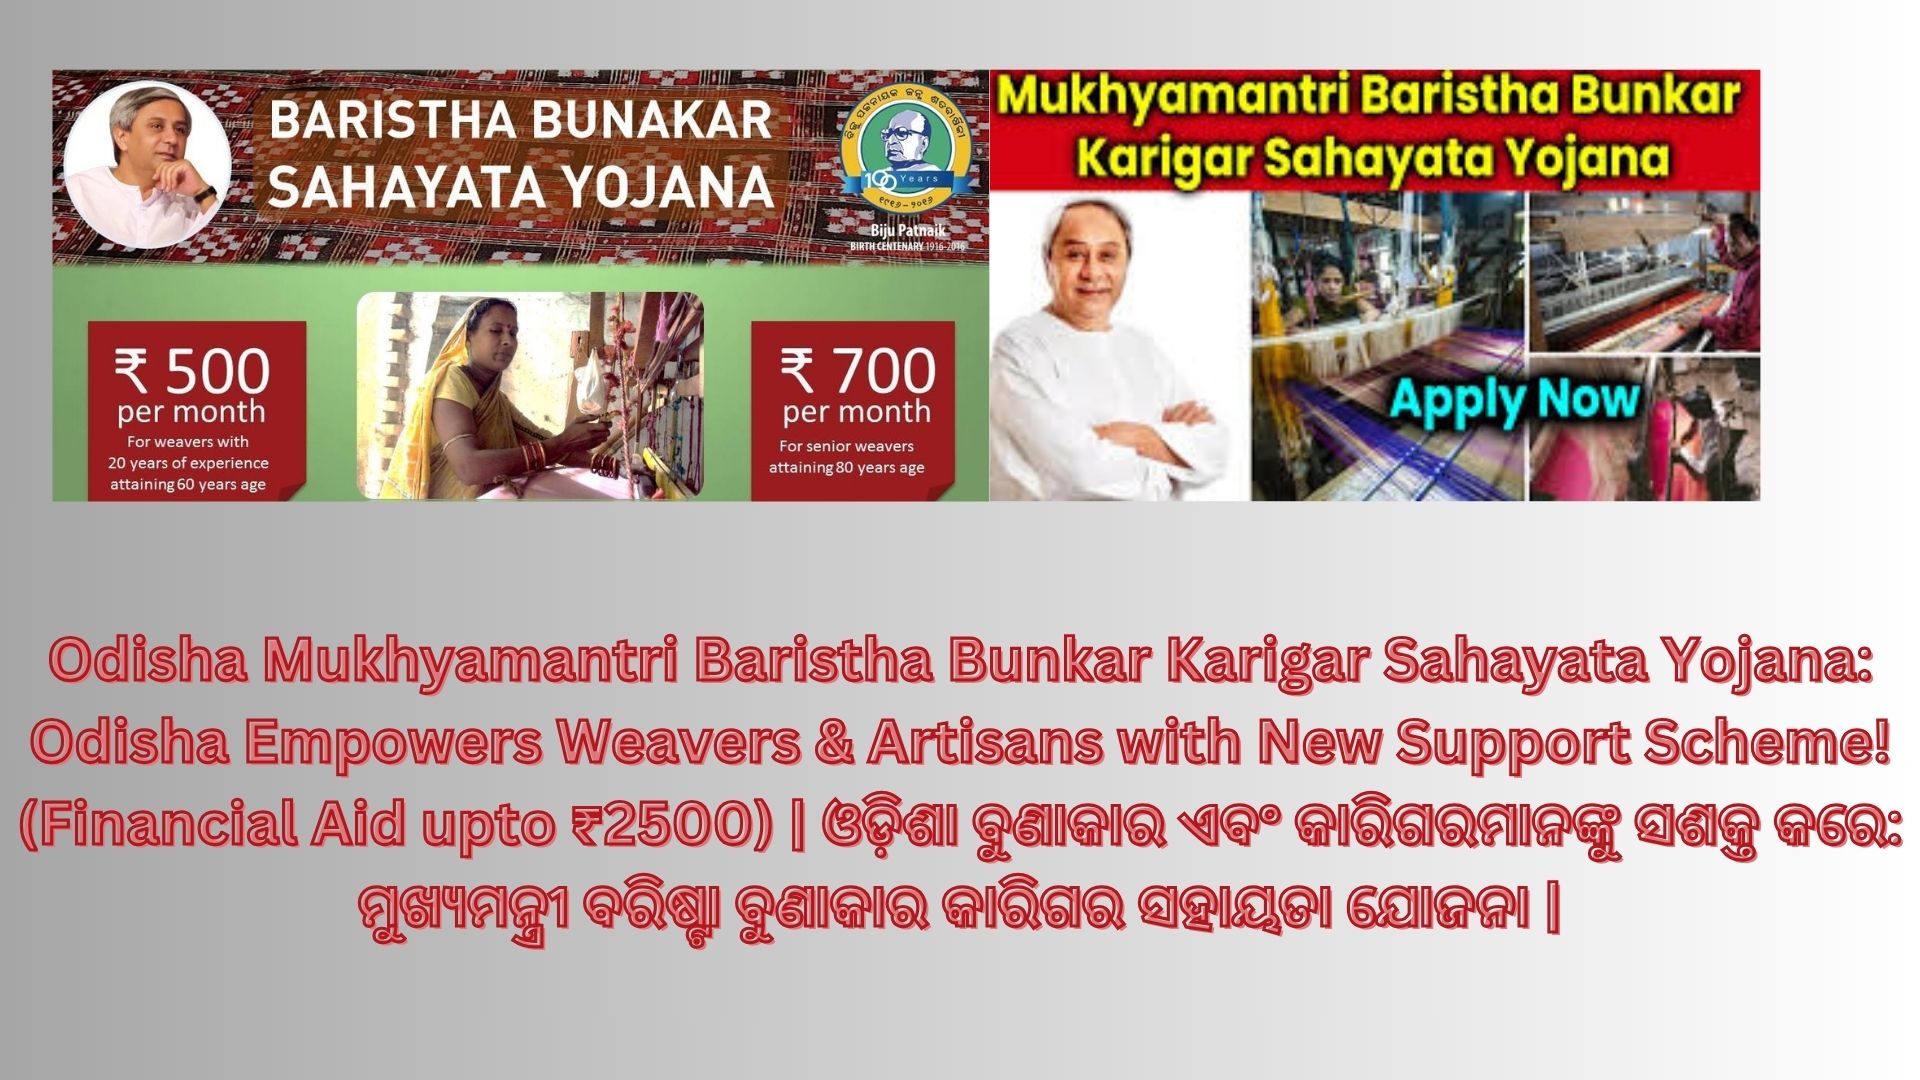 Odisha Mukhyamantri Baristha Bunkar Karigar Sahayata Yojana: Odisha Empowers Weavers & Artisans with New Support Scheme! (Financial Aid upto ₹2500) | ଓଡ଼ିଶା ବୁଣାକାର ଏବଂ କାରିଗରମାନଙ୍କୁ ସଶକ୍ତ କରେ: ମୁଖ୍ୟମନ୍ତ୍ରୀ ବରିଷ୍ଟା ବୁଣାକାର କାରିଗର ସହାୟତା ଯୋଜନା |